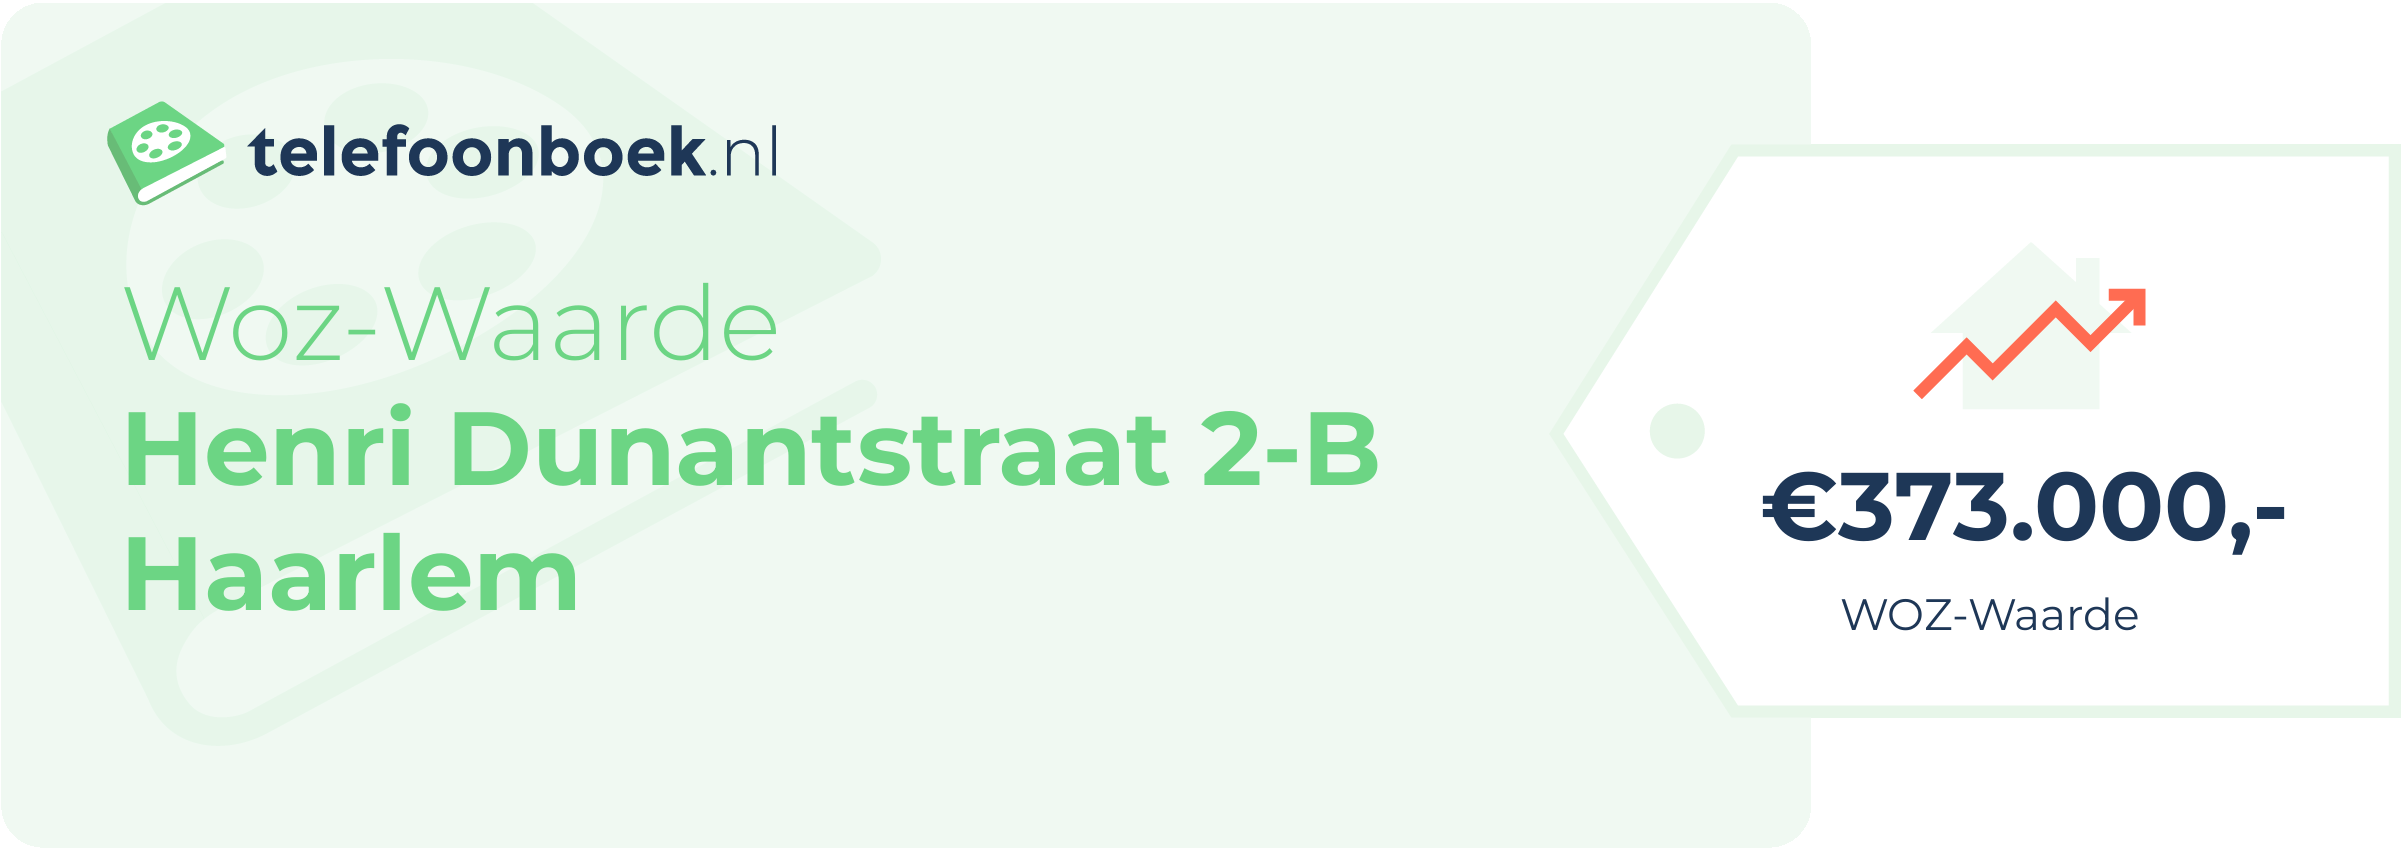 WOZ-waarde Henri Dunantstraat 2-B Haarlem